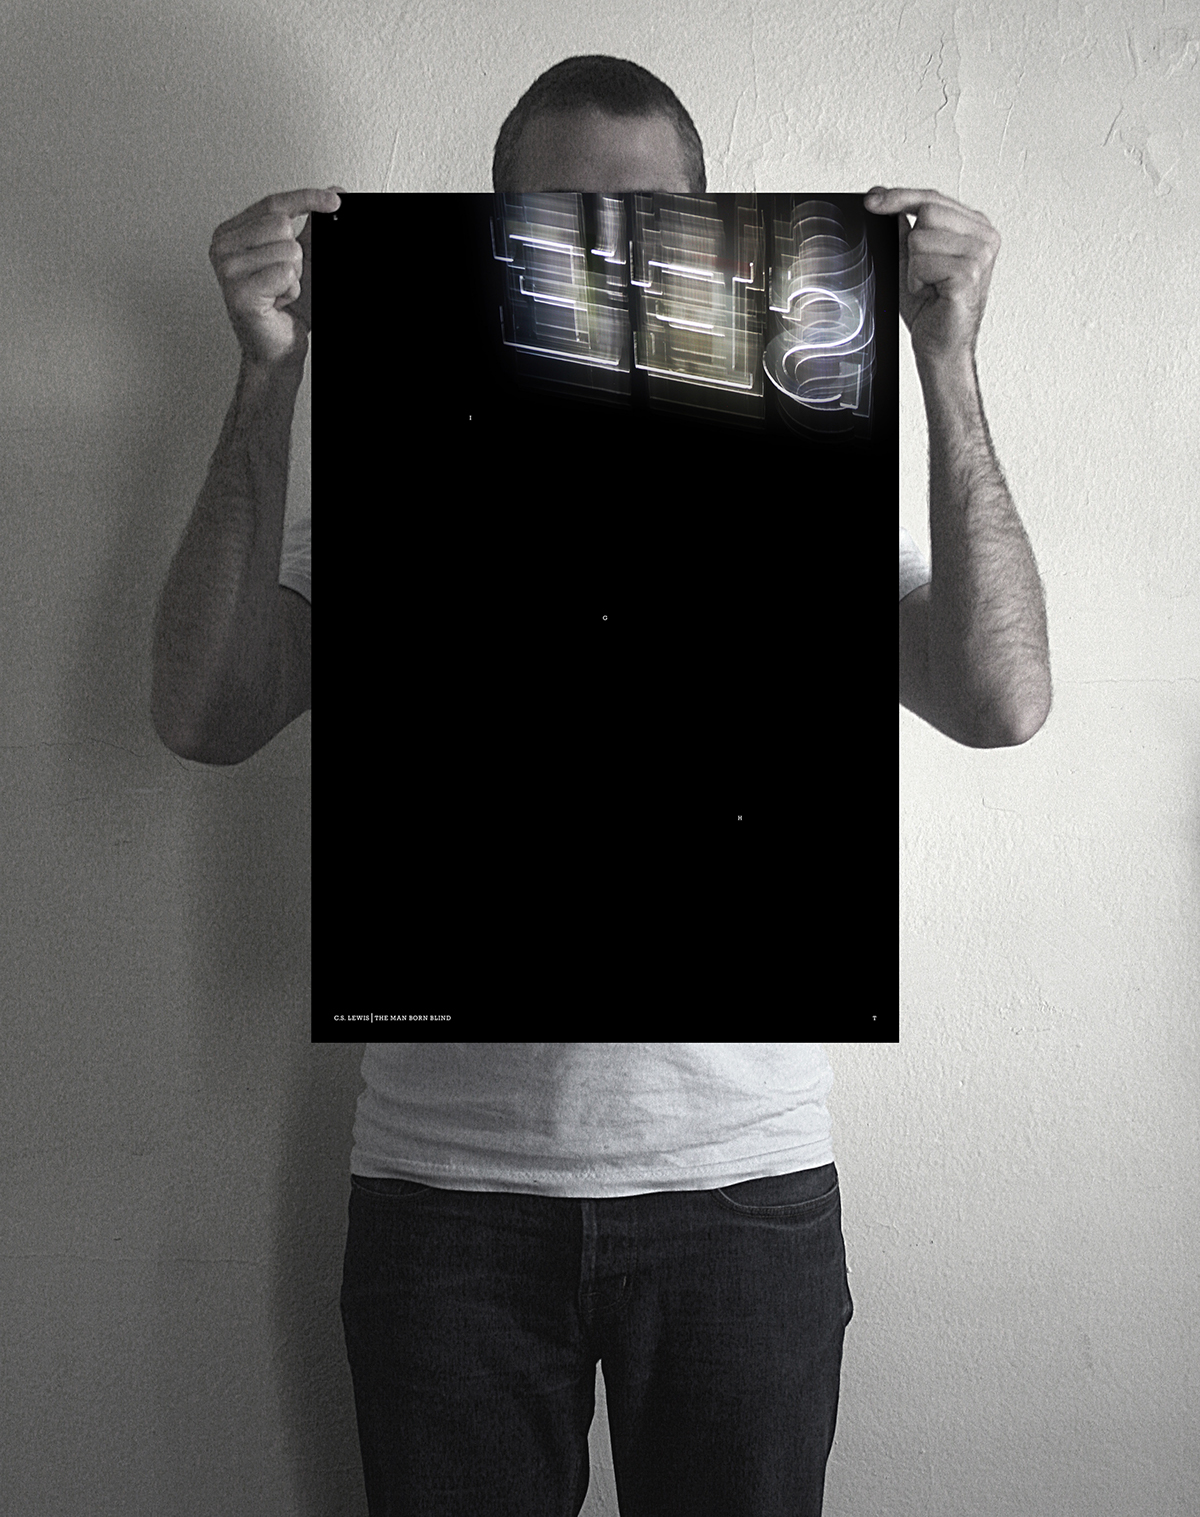  storytelling information design posters light blur photograph